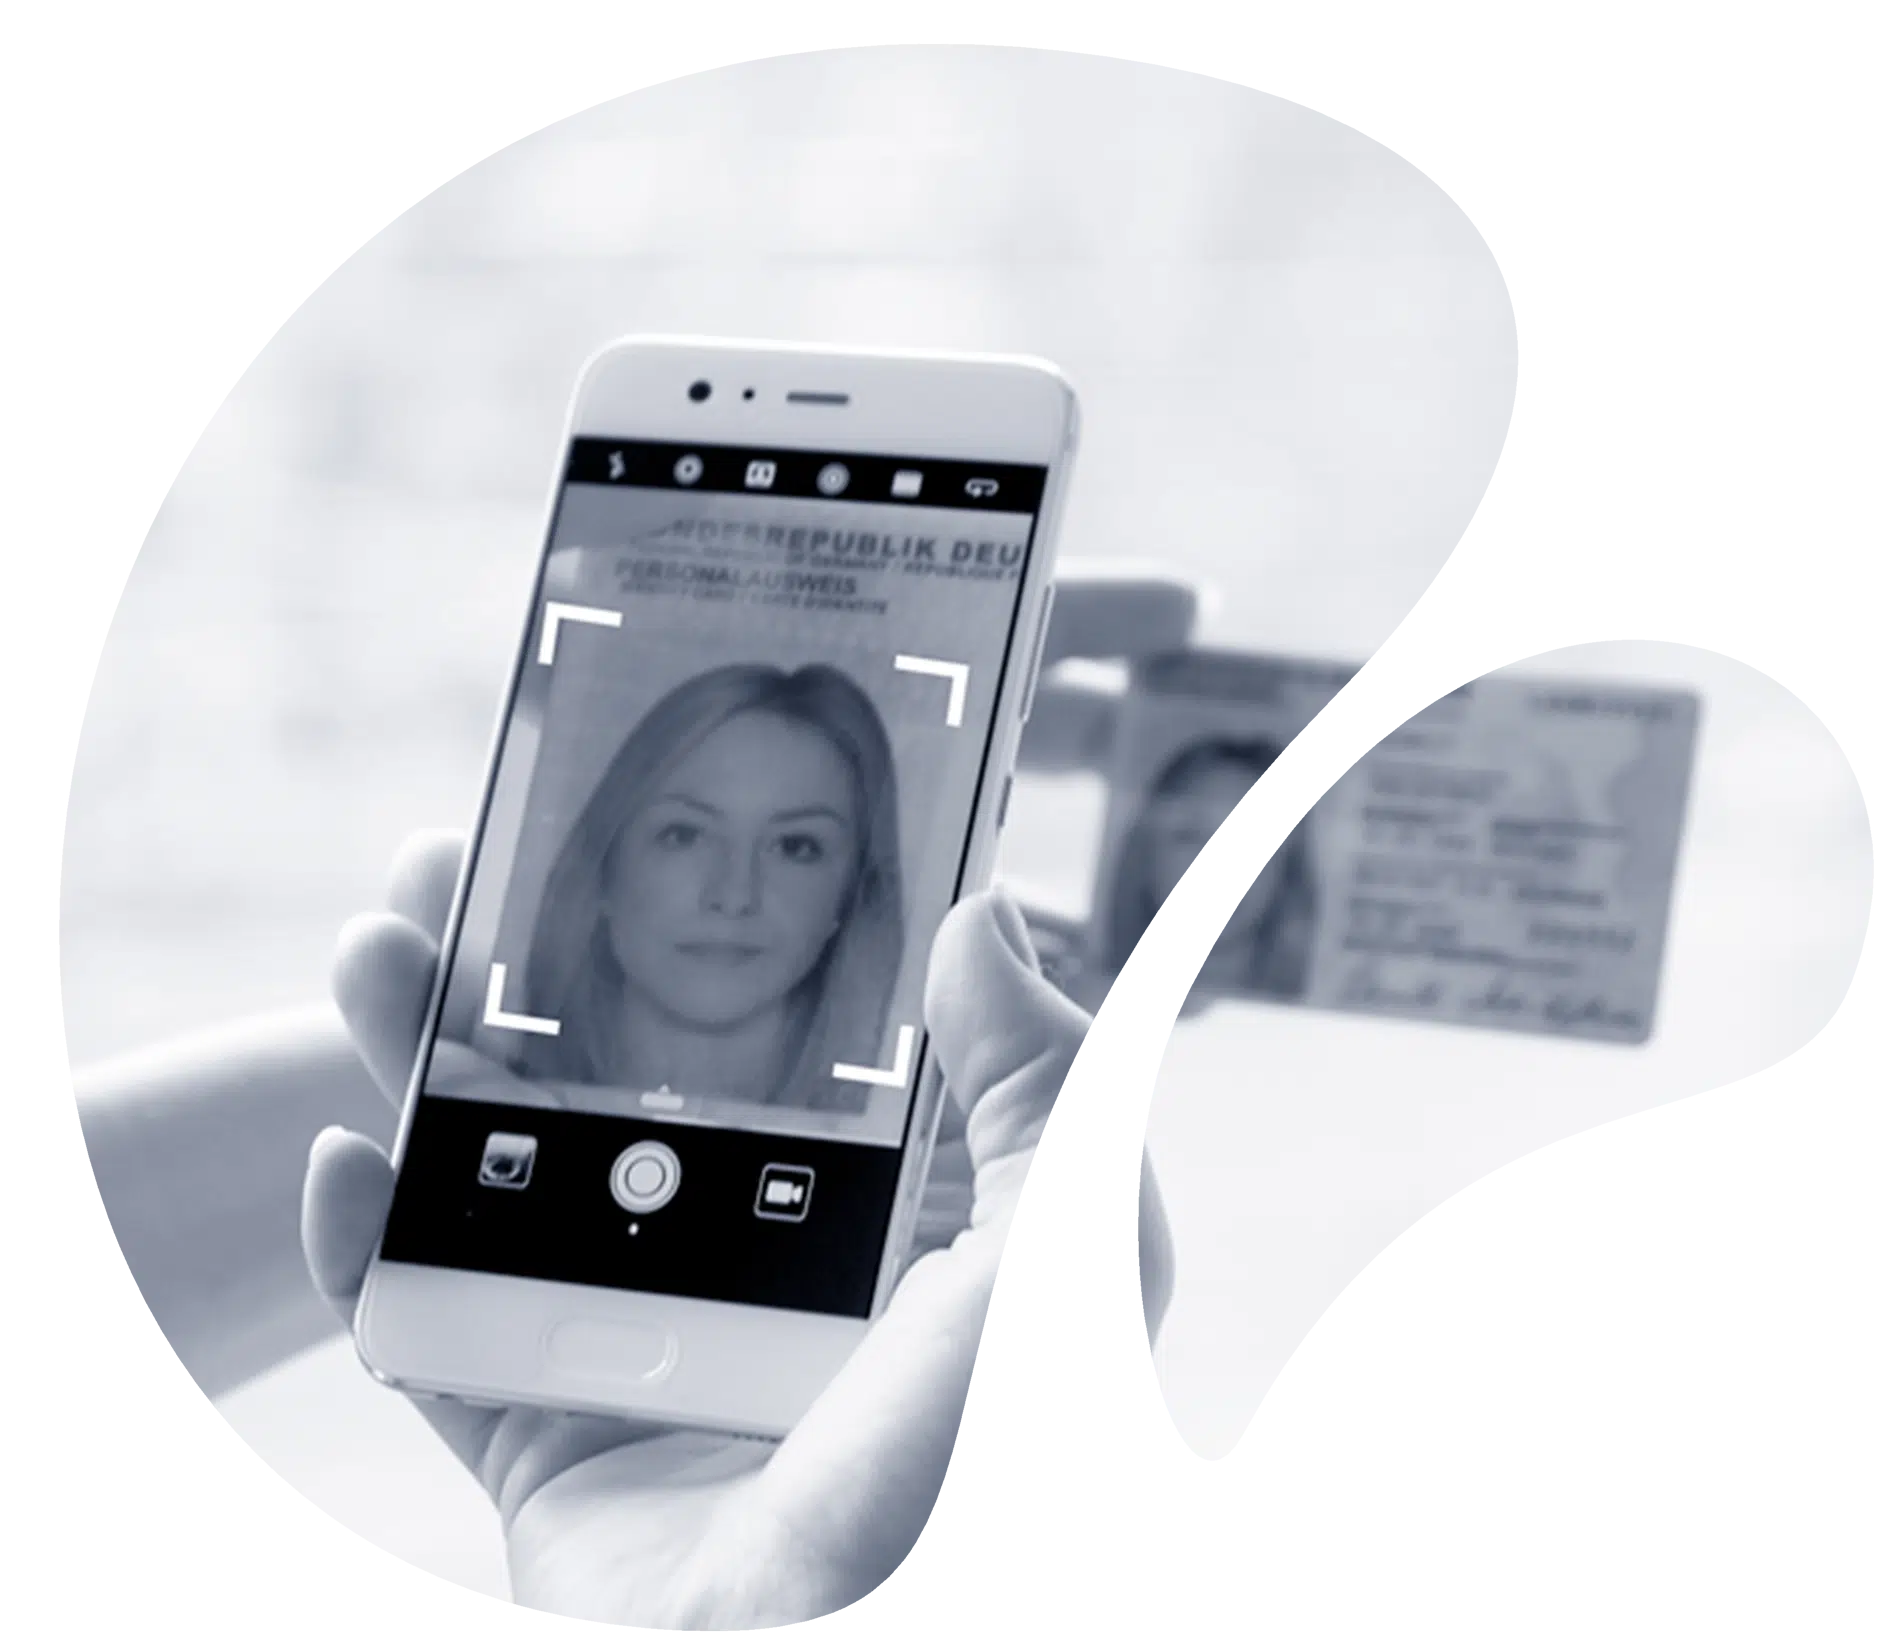 Online identity verification with BioID PhotoVerify on phone API